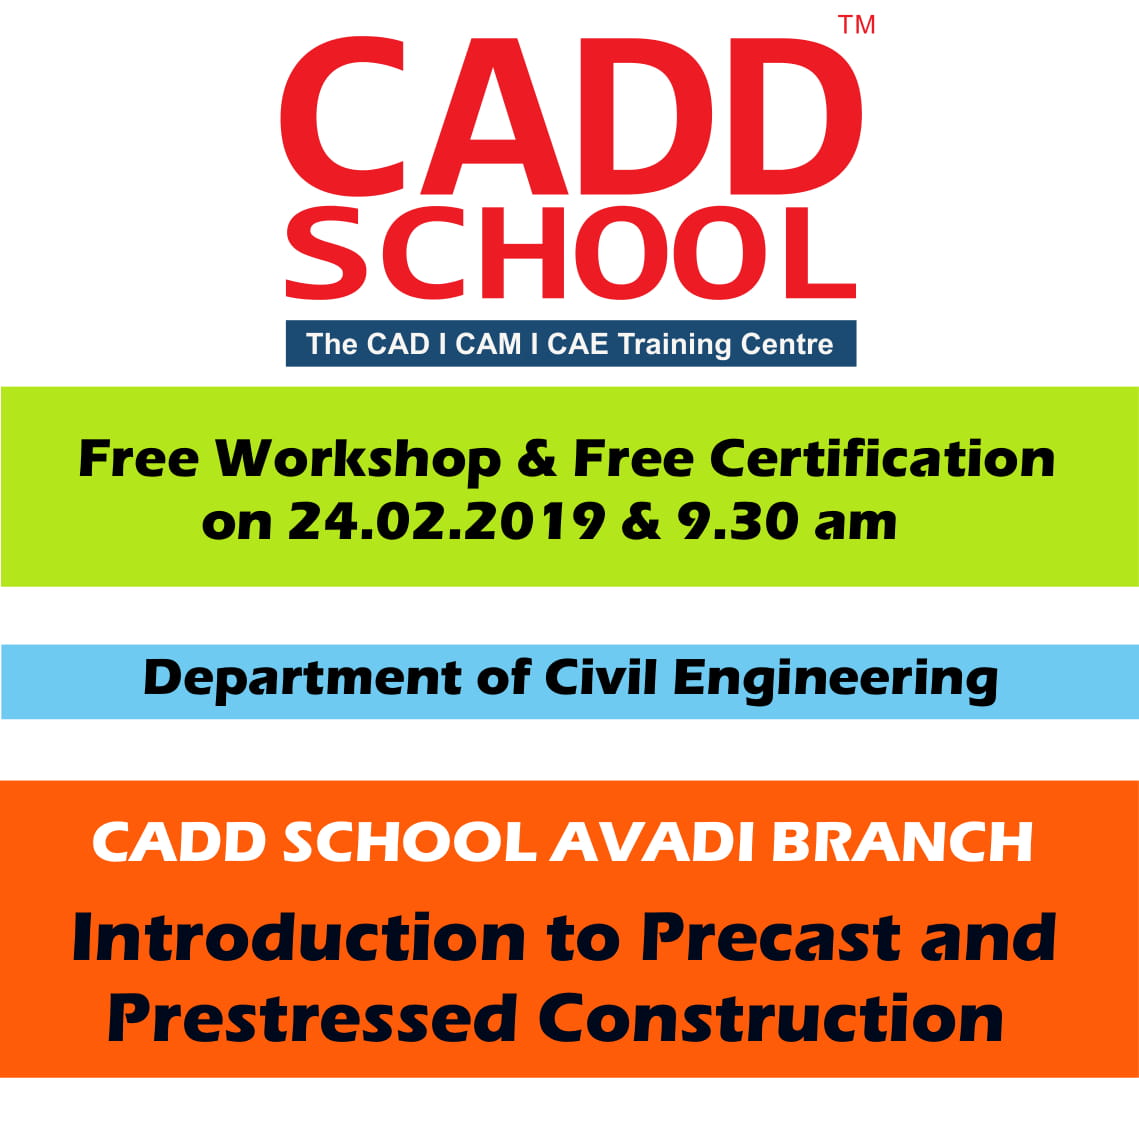 Free Workshop & Free Certification